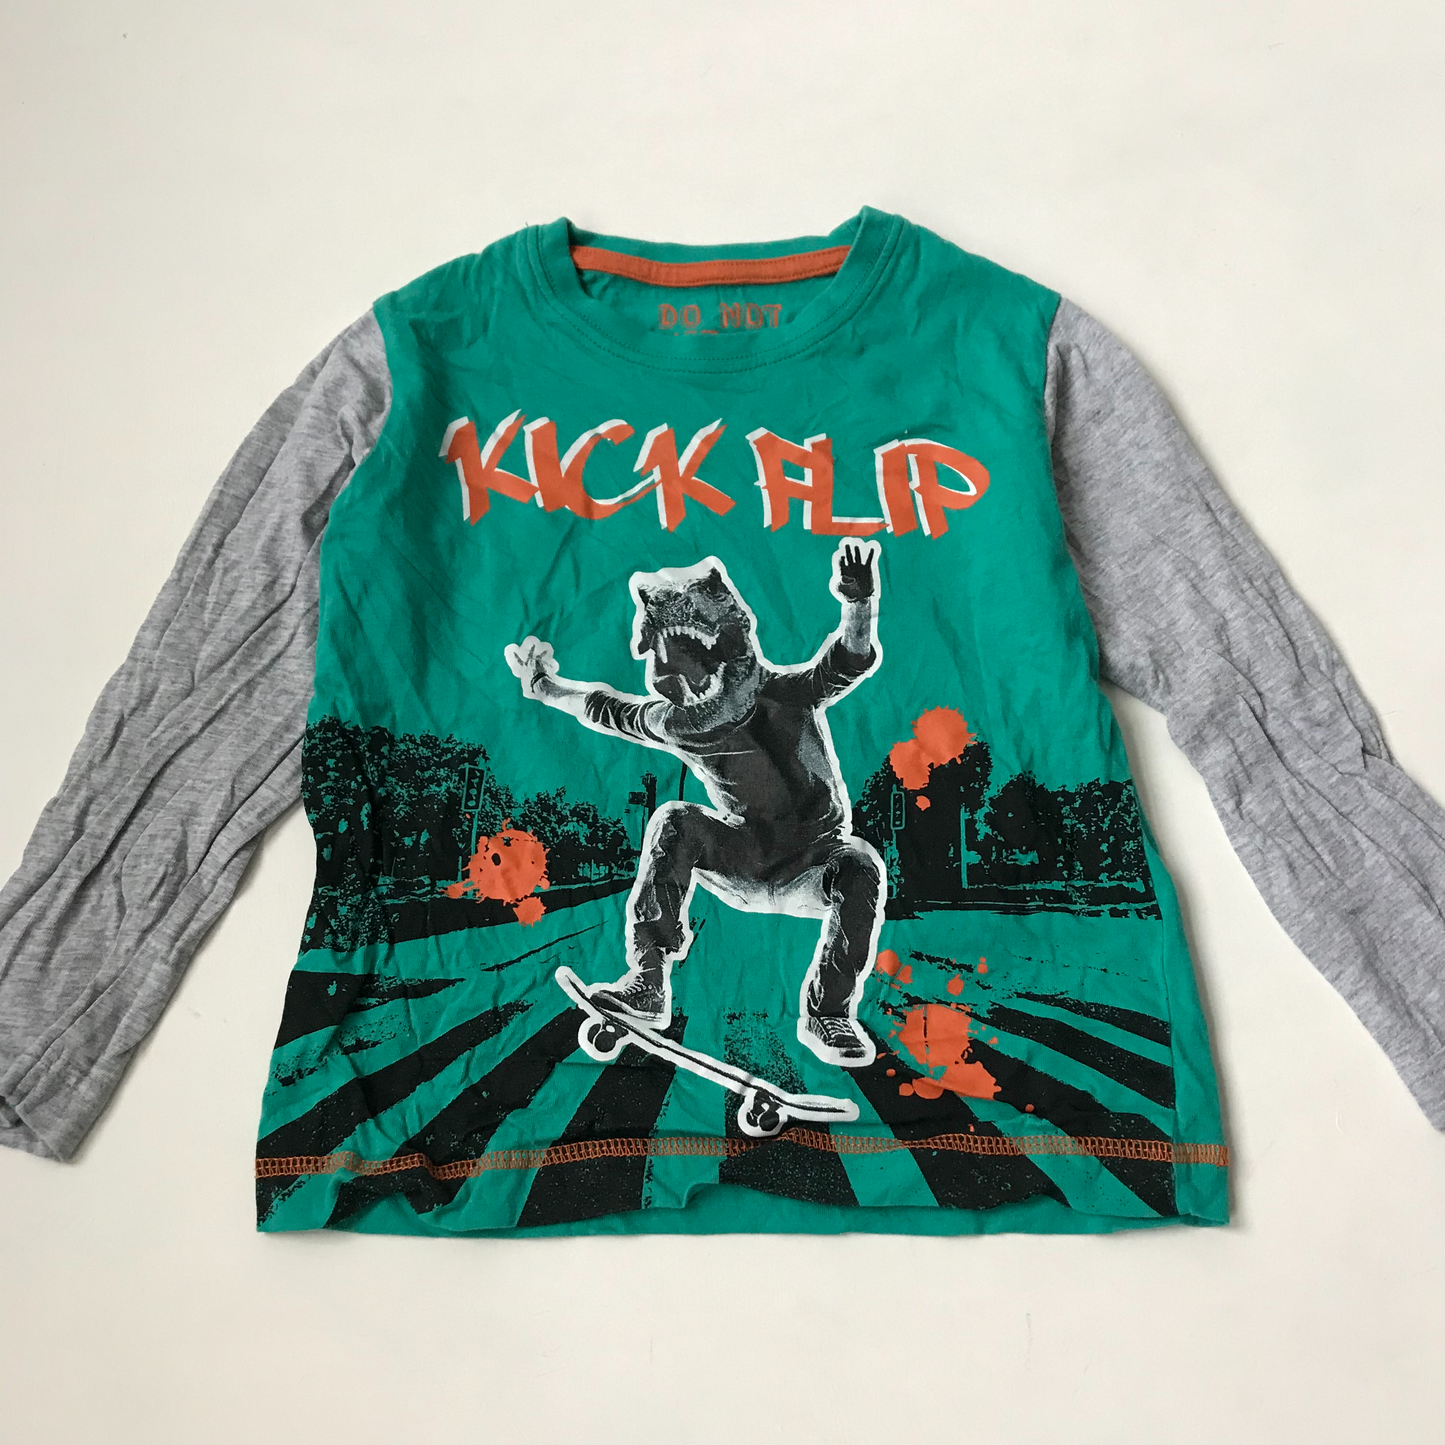 T-shirt - 'Kick Flip' - Age 4